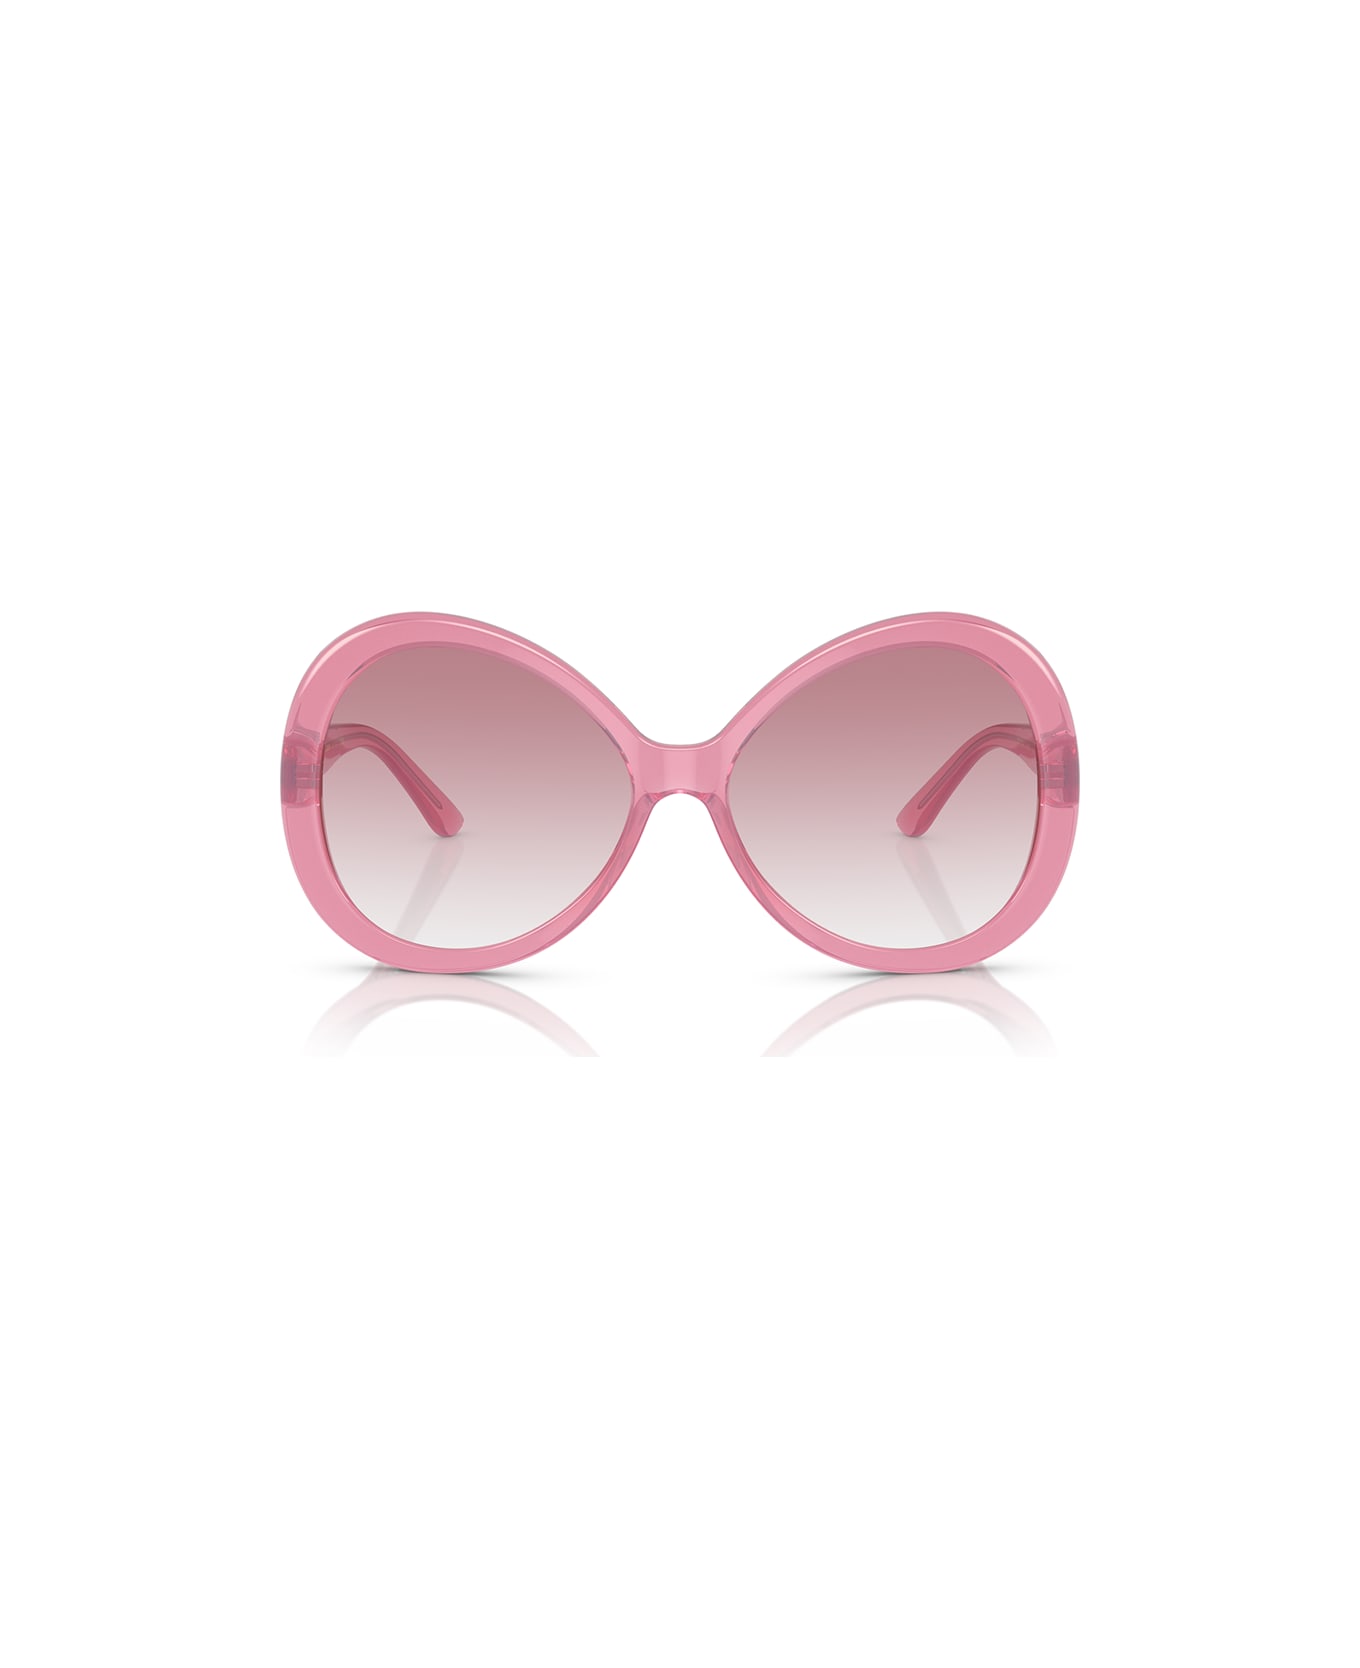 Dolce & Gabbana Eyewear Sunglasses - Rosa/Rosa sfumato